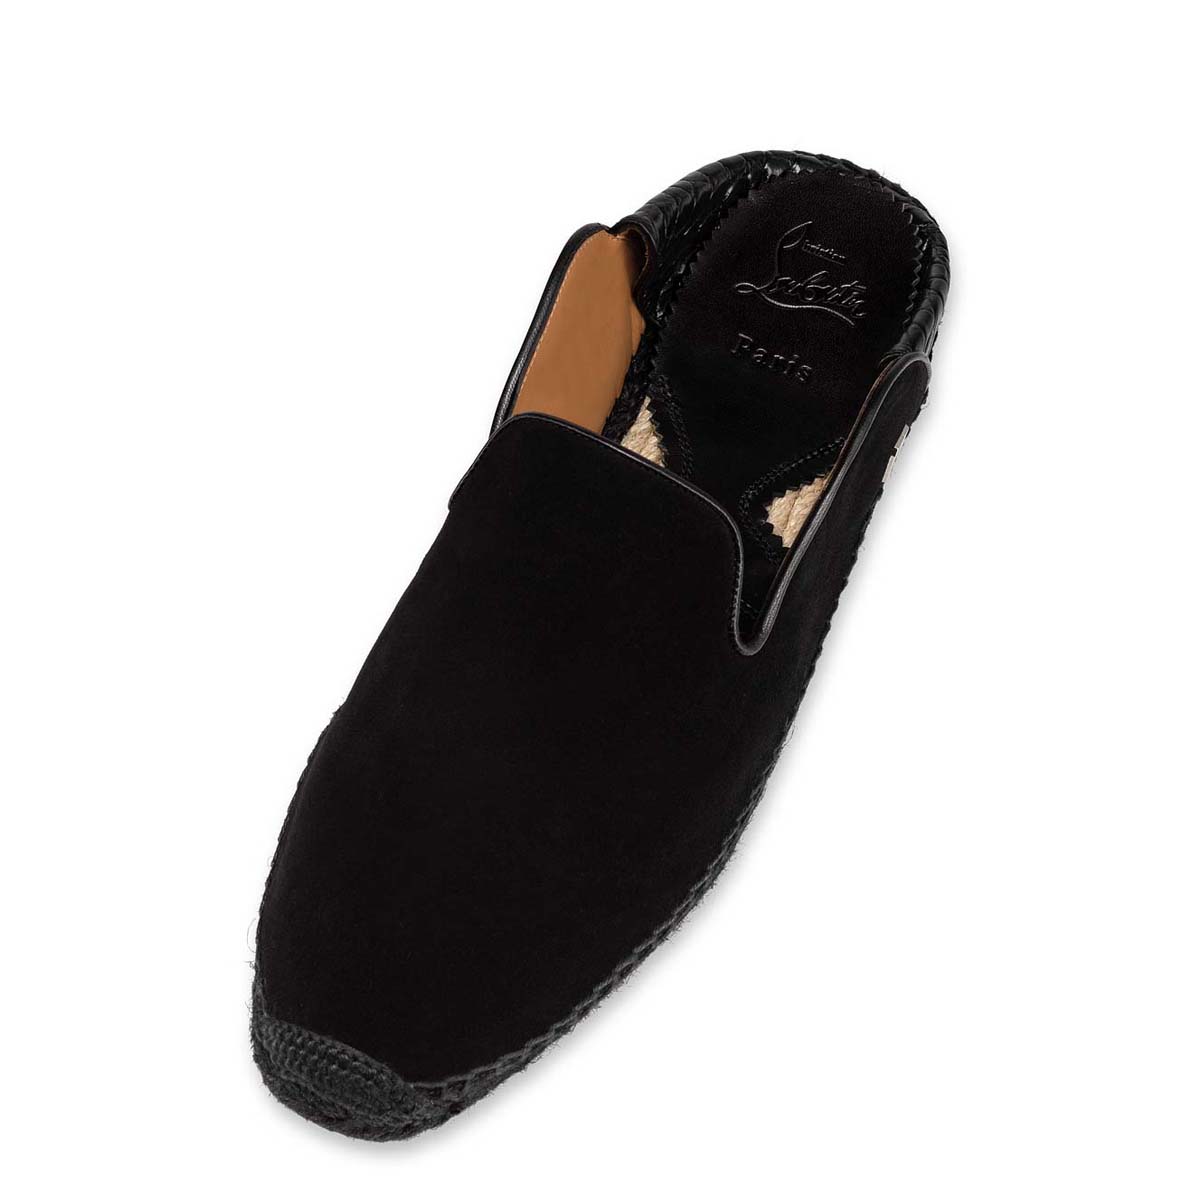 ESPADON BLACK CALF - Shoes - Men - Christian Louboutin